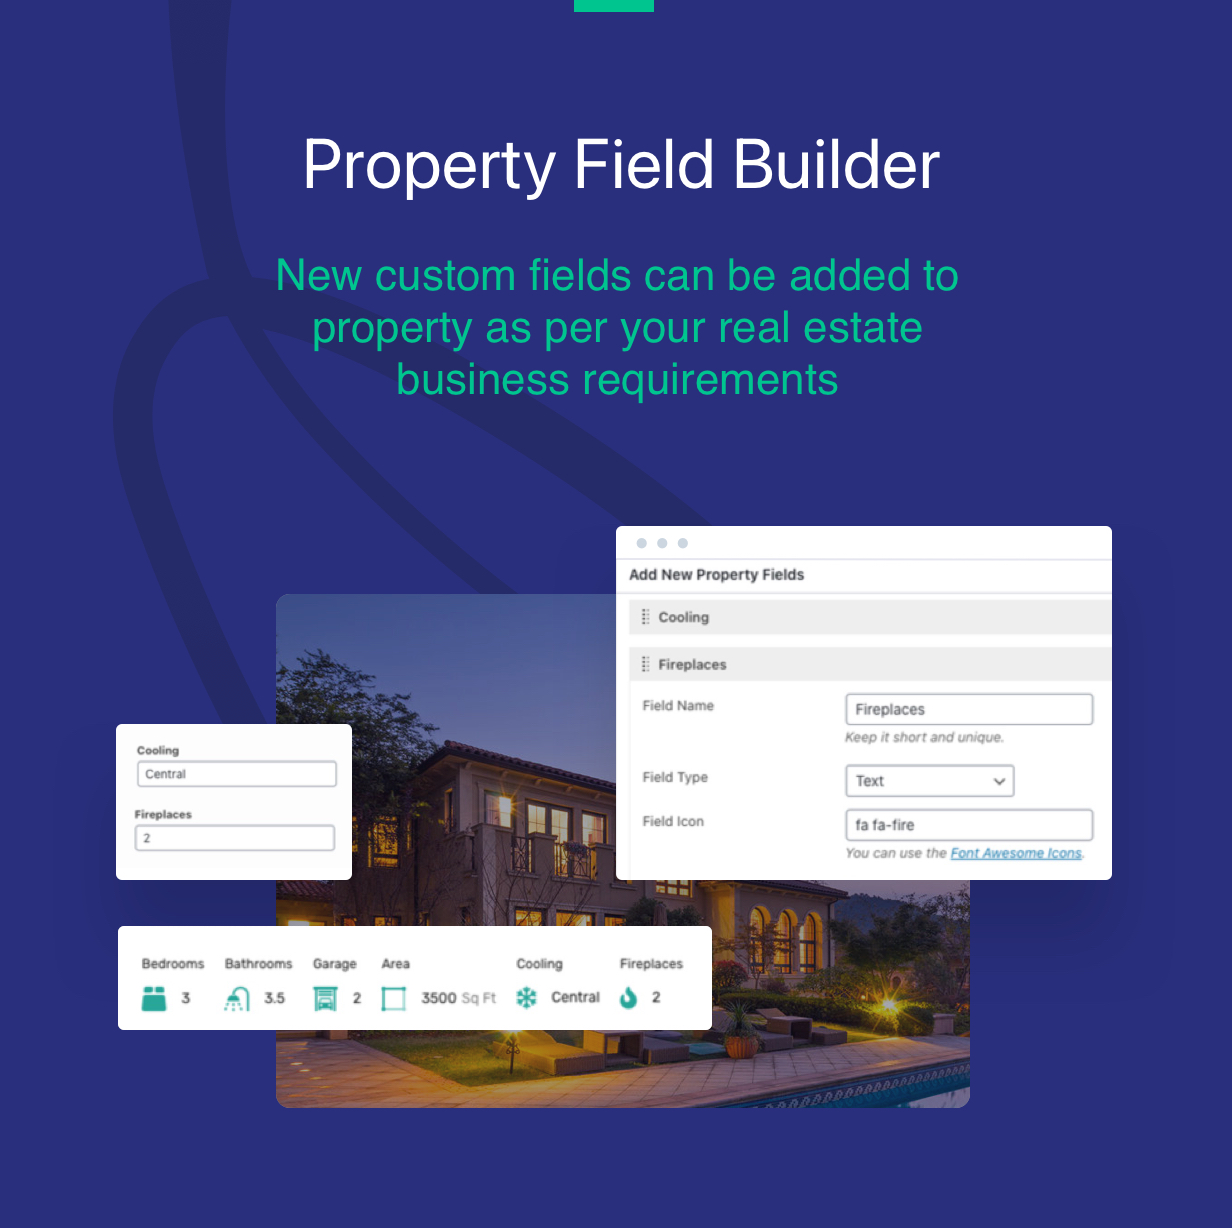 Real Estate Property Field Builder to add custom fields.